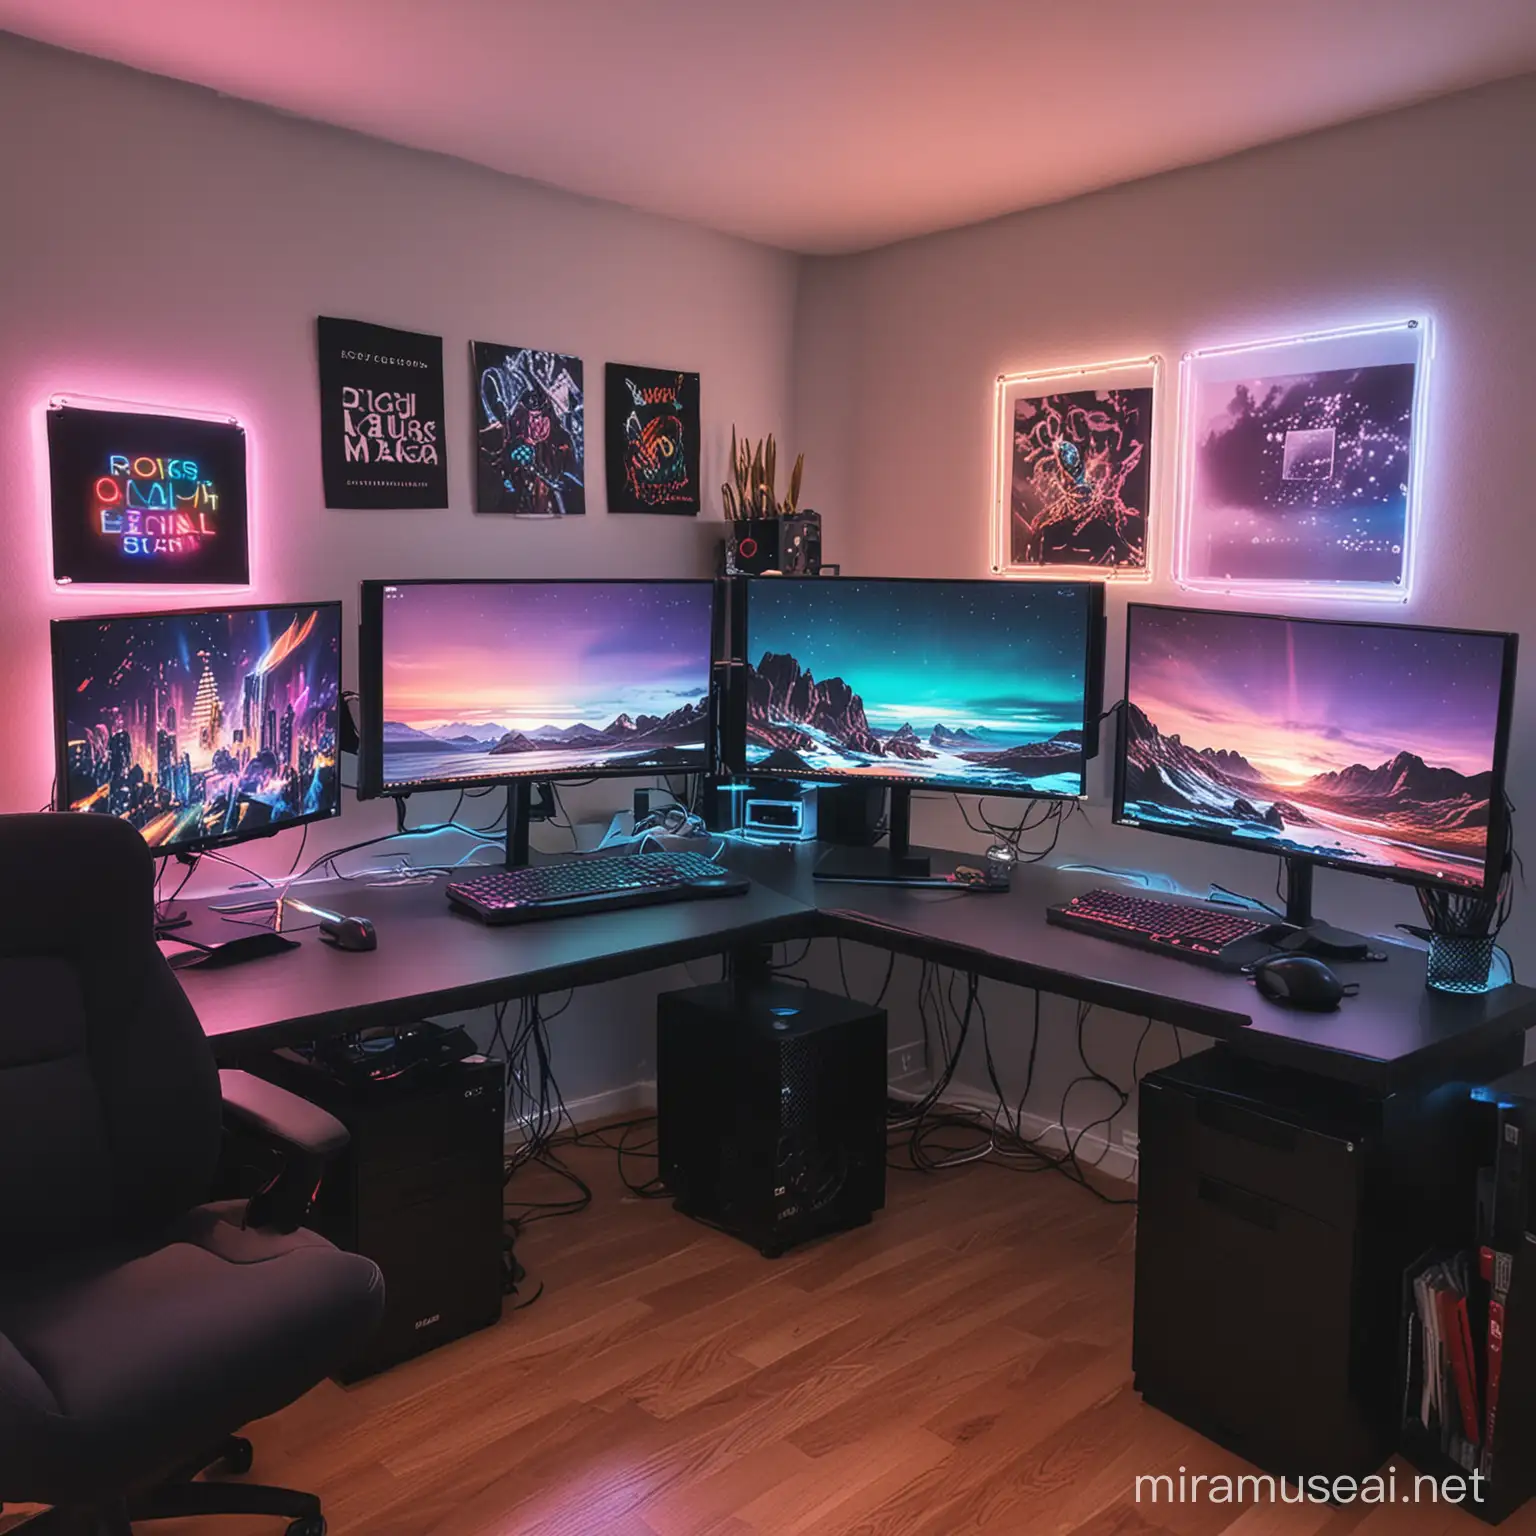 Make a high computer setup with rgb light and beautiful aesthetic room 